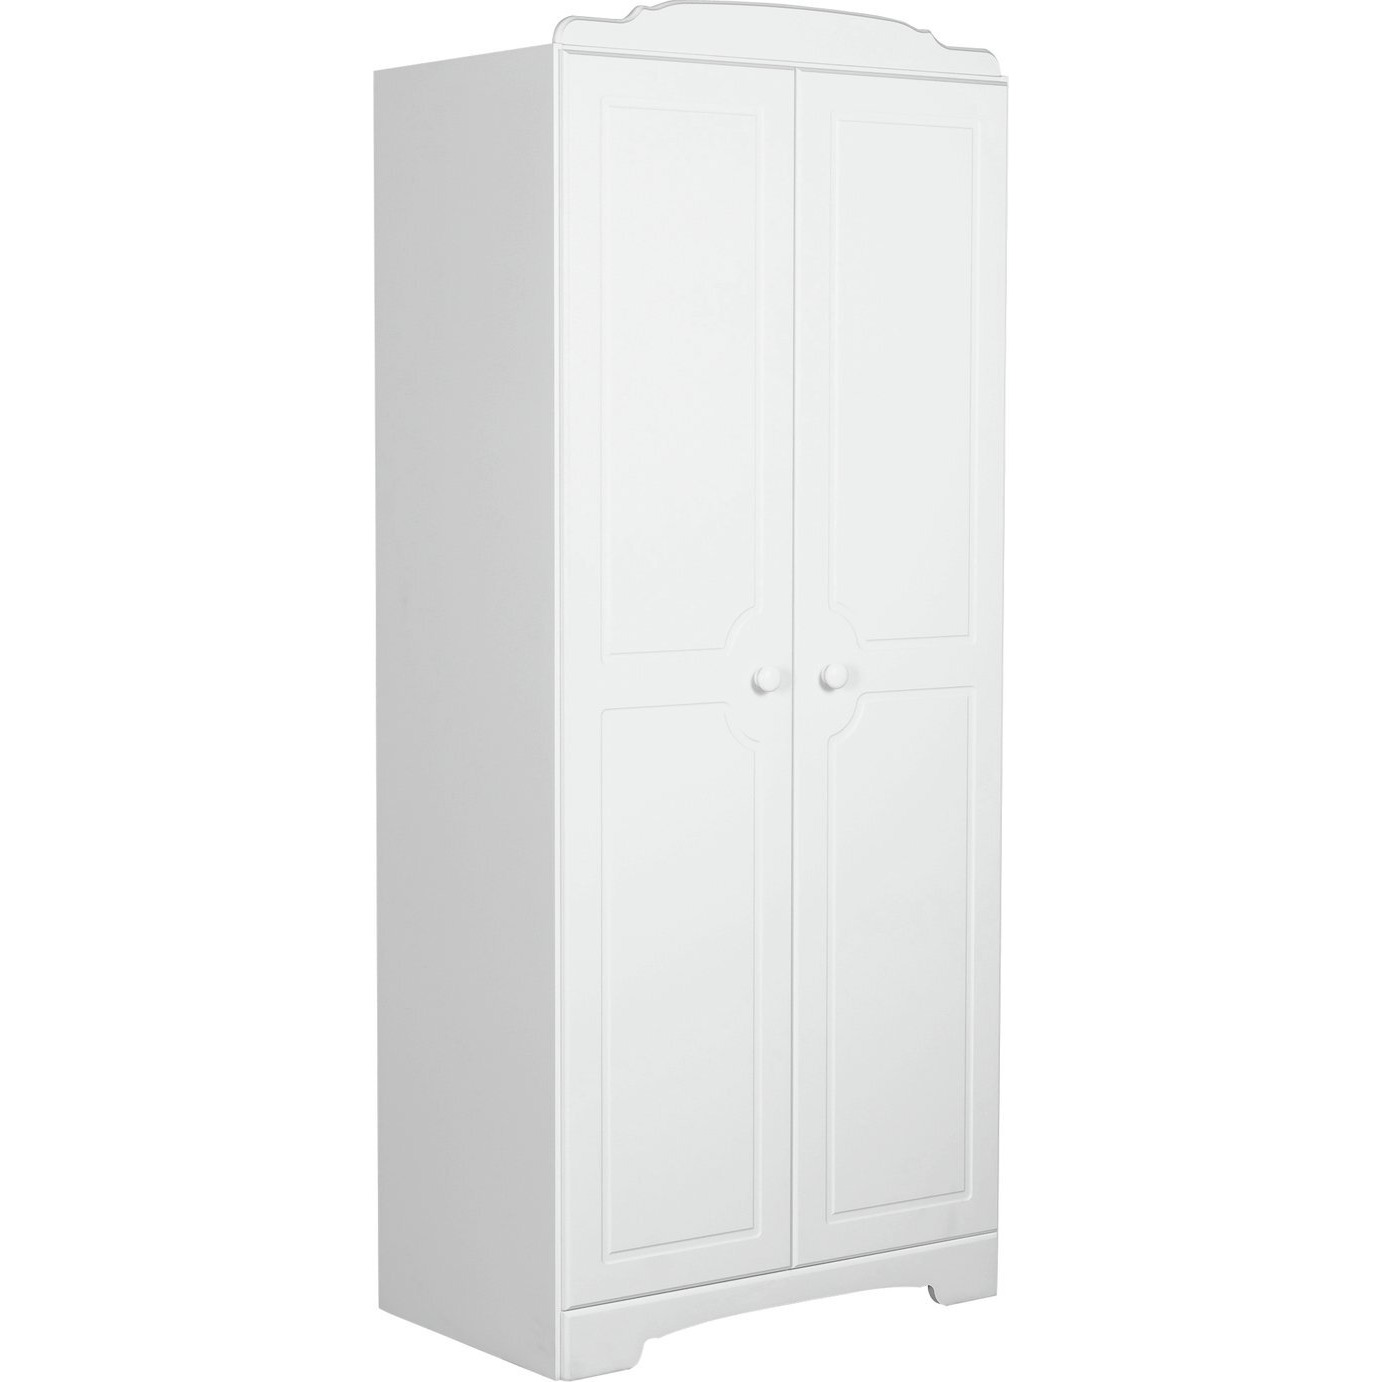 Argos Home Nordic 2 Door Wardrobe - Soft White - image 1